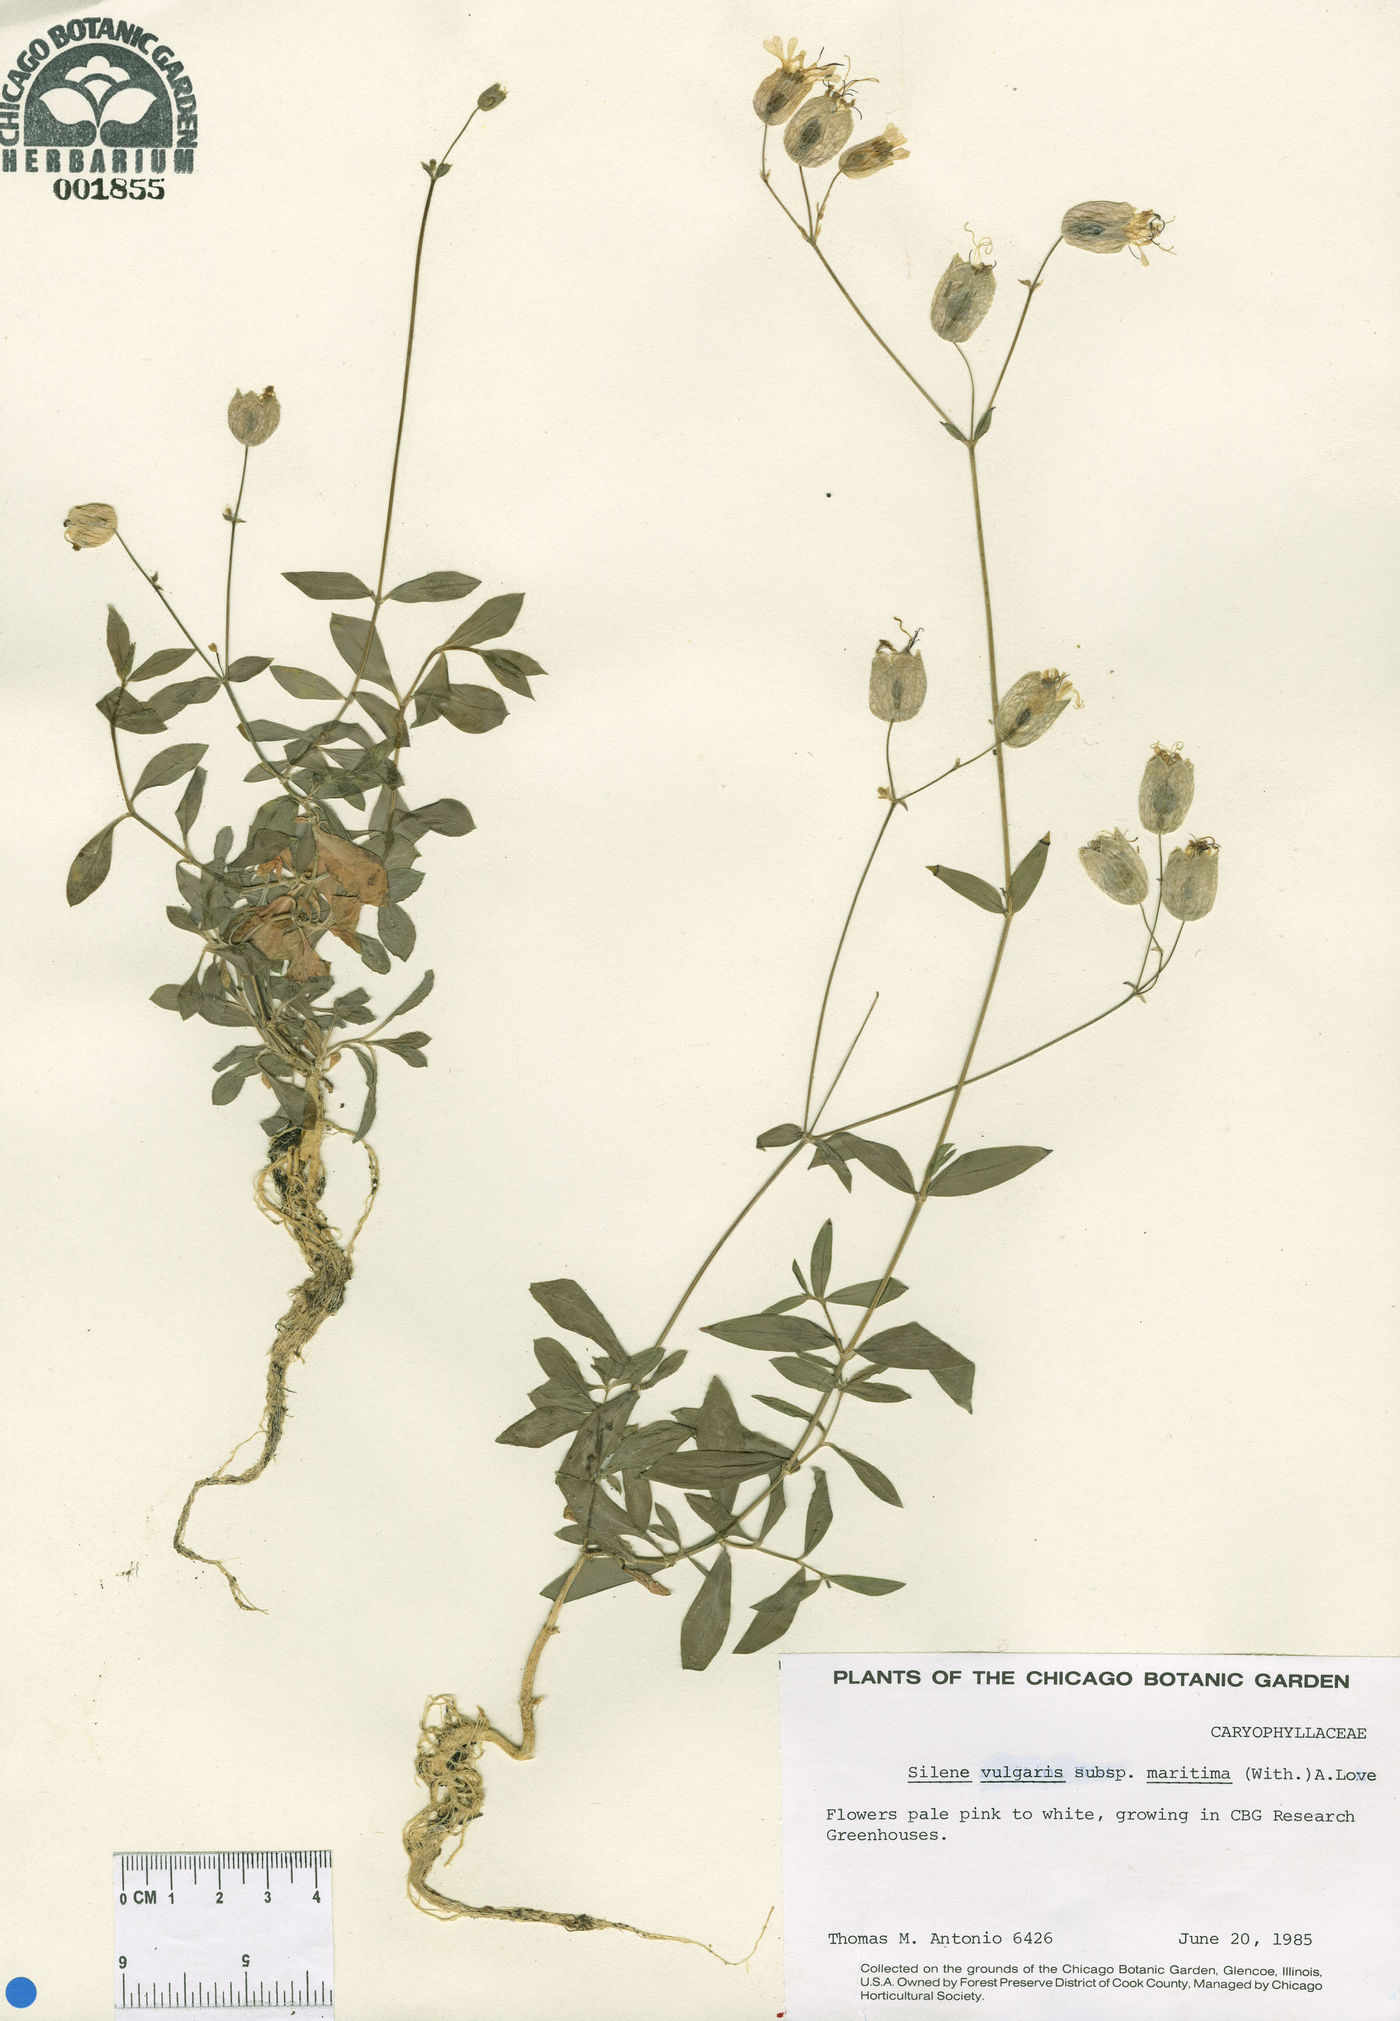 Oberna uniflora image